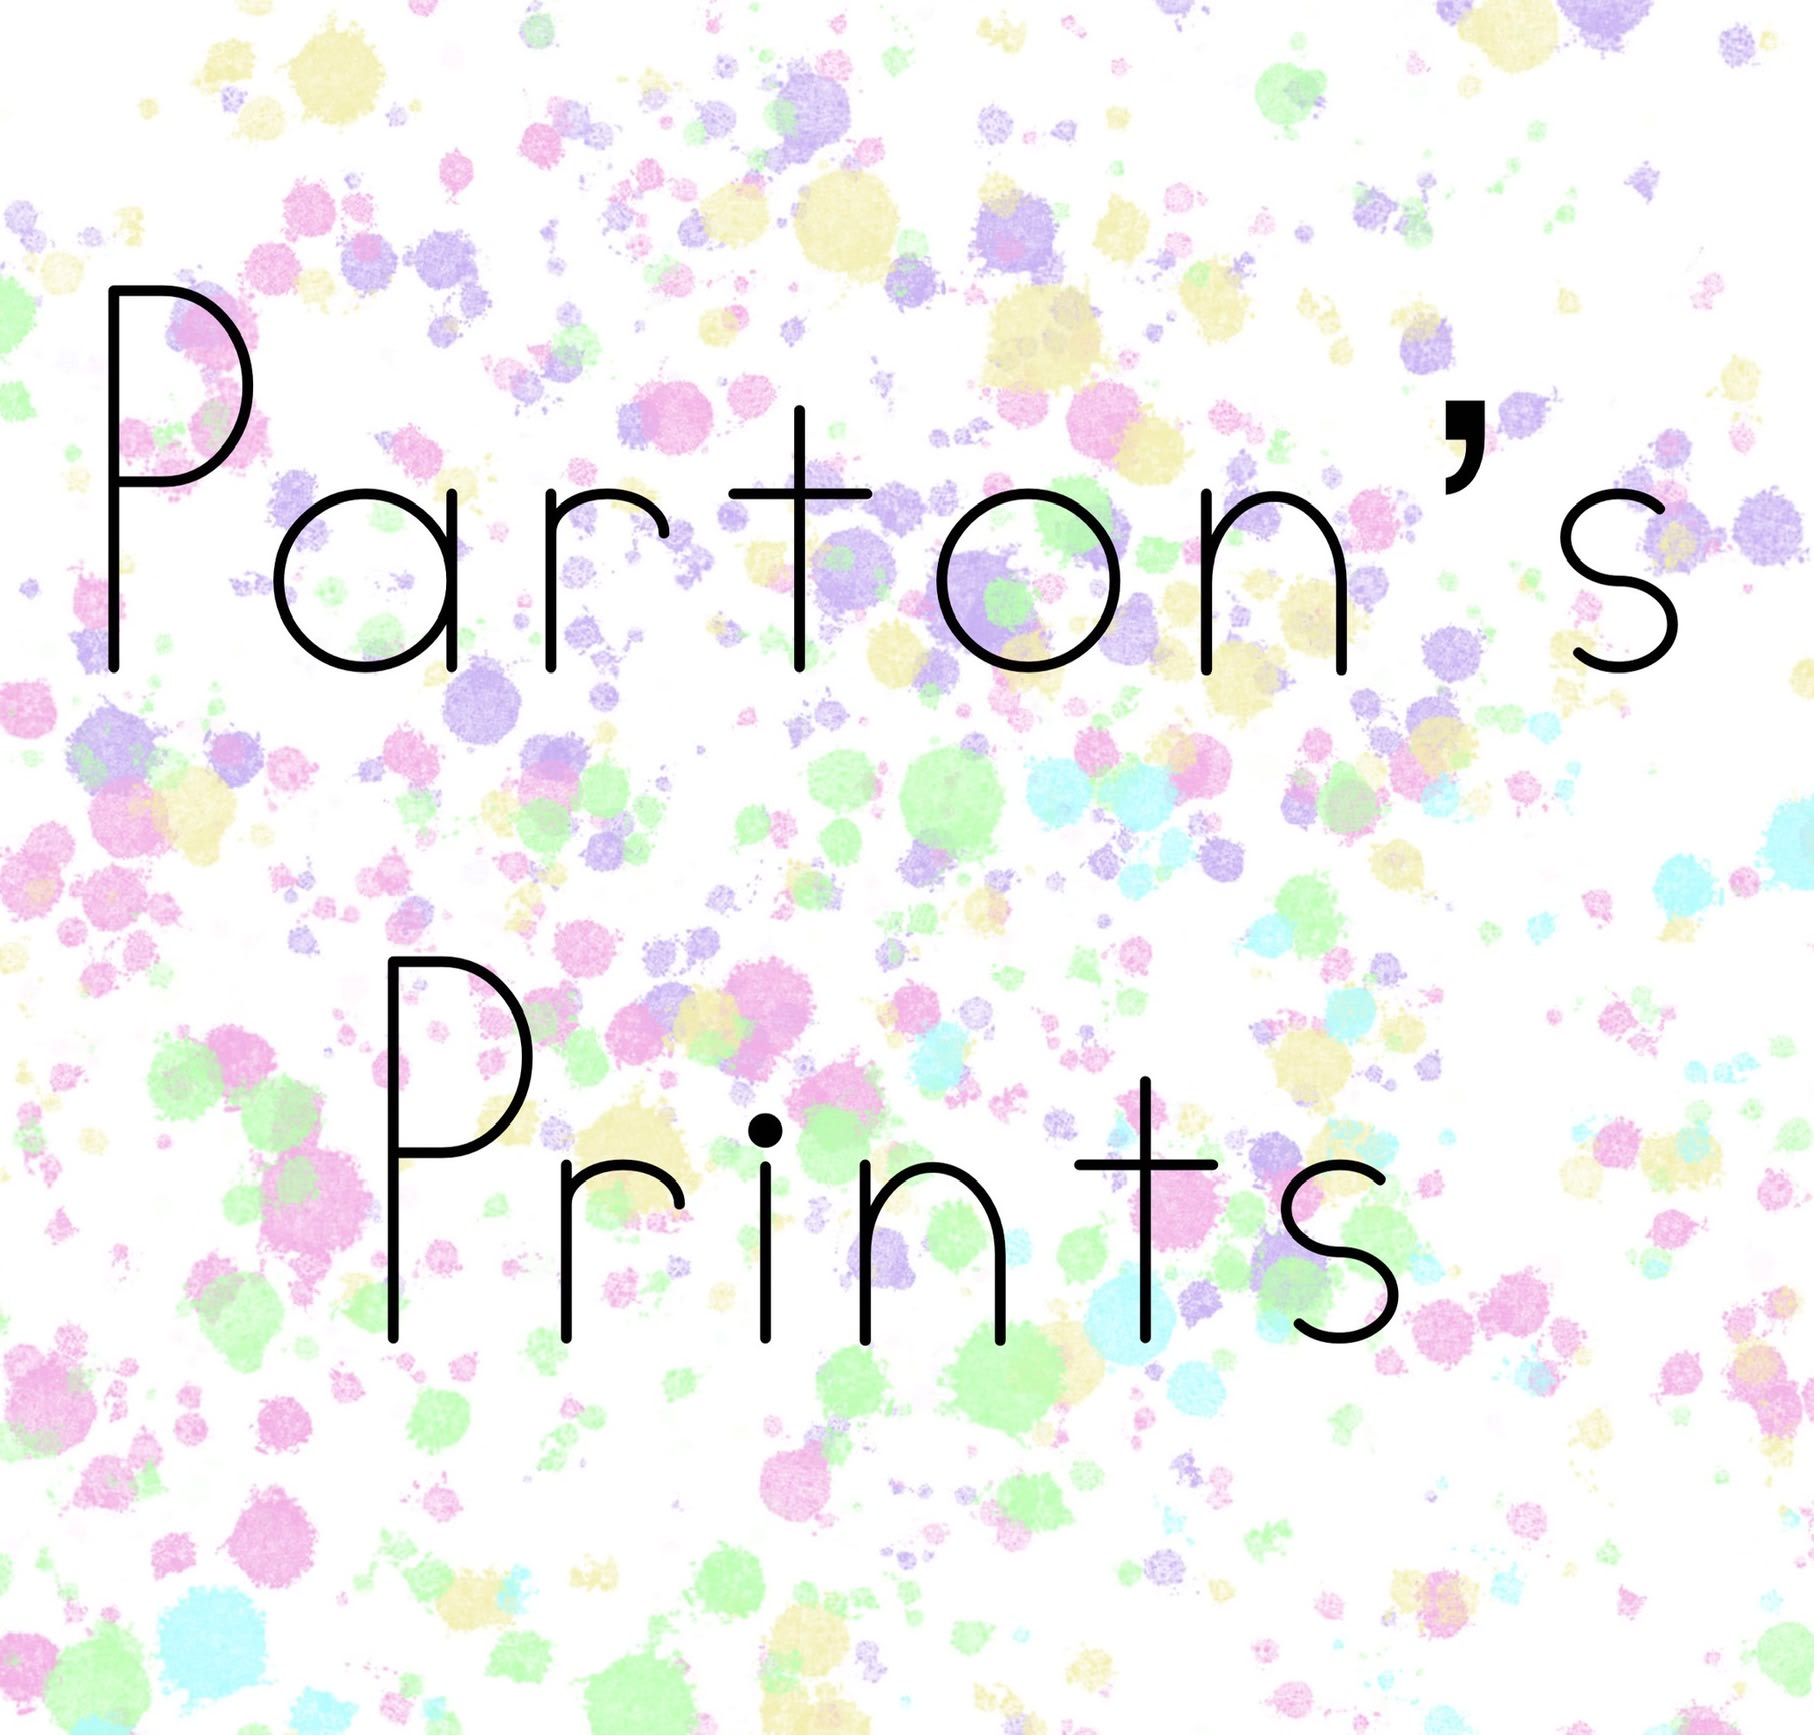 Parton’s Prints UK